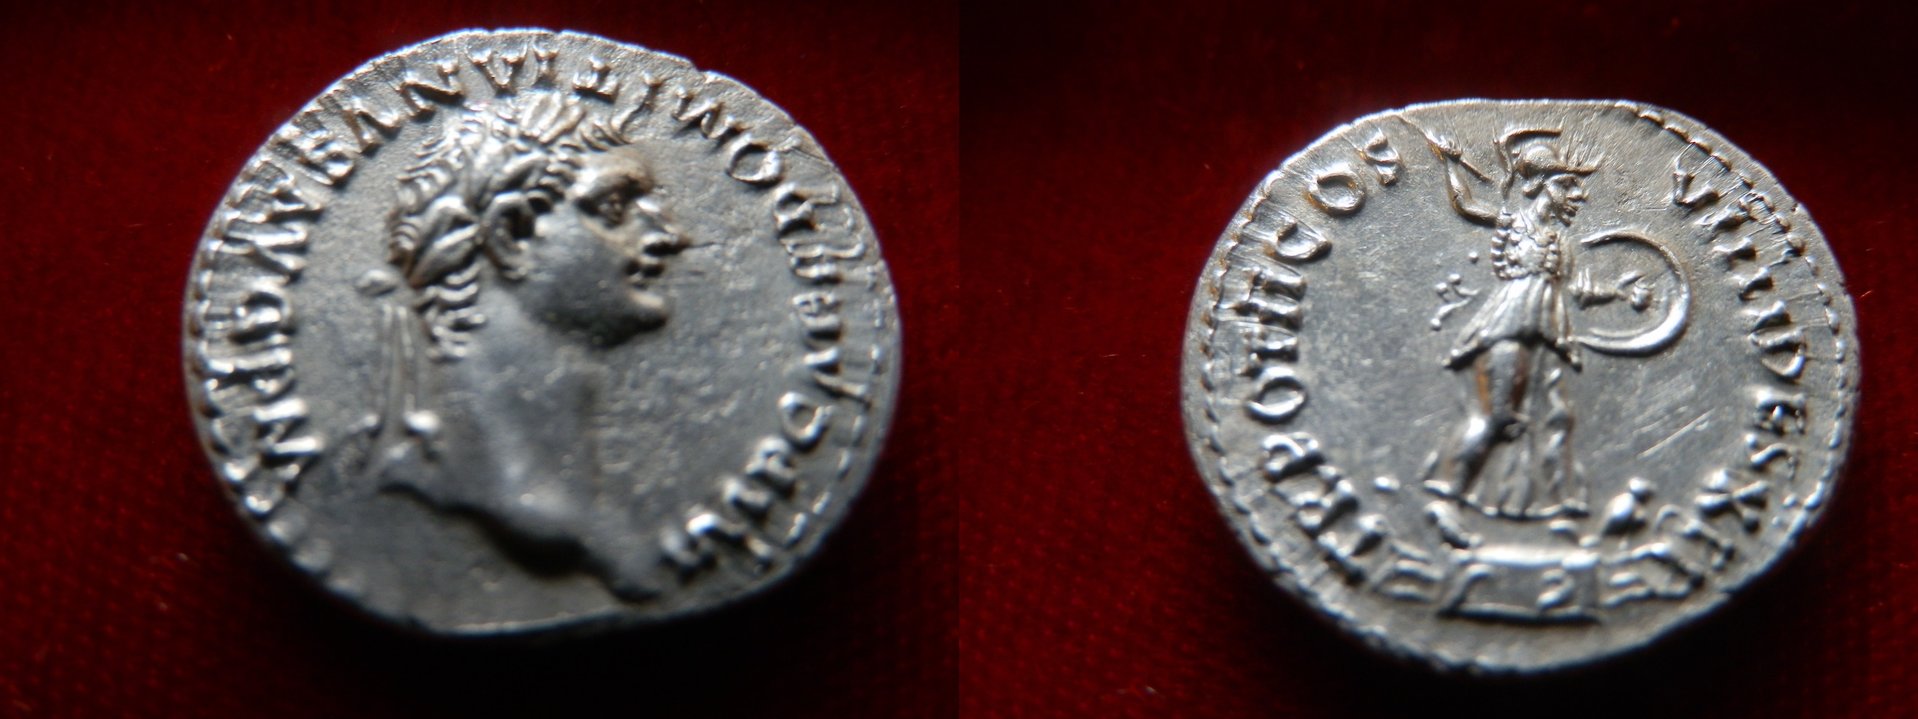 Domitian ric 164 2 edited.jpeg